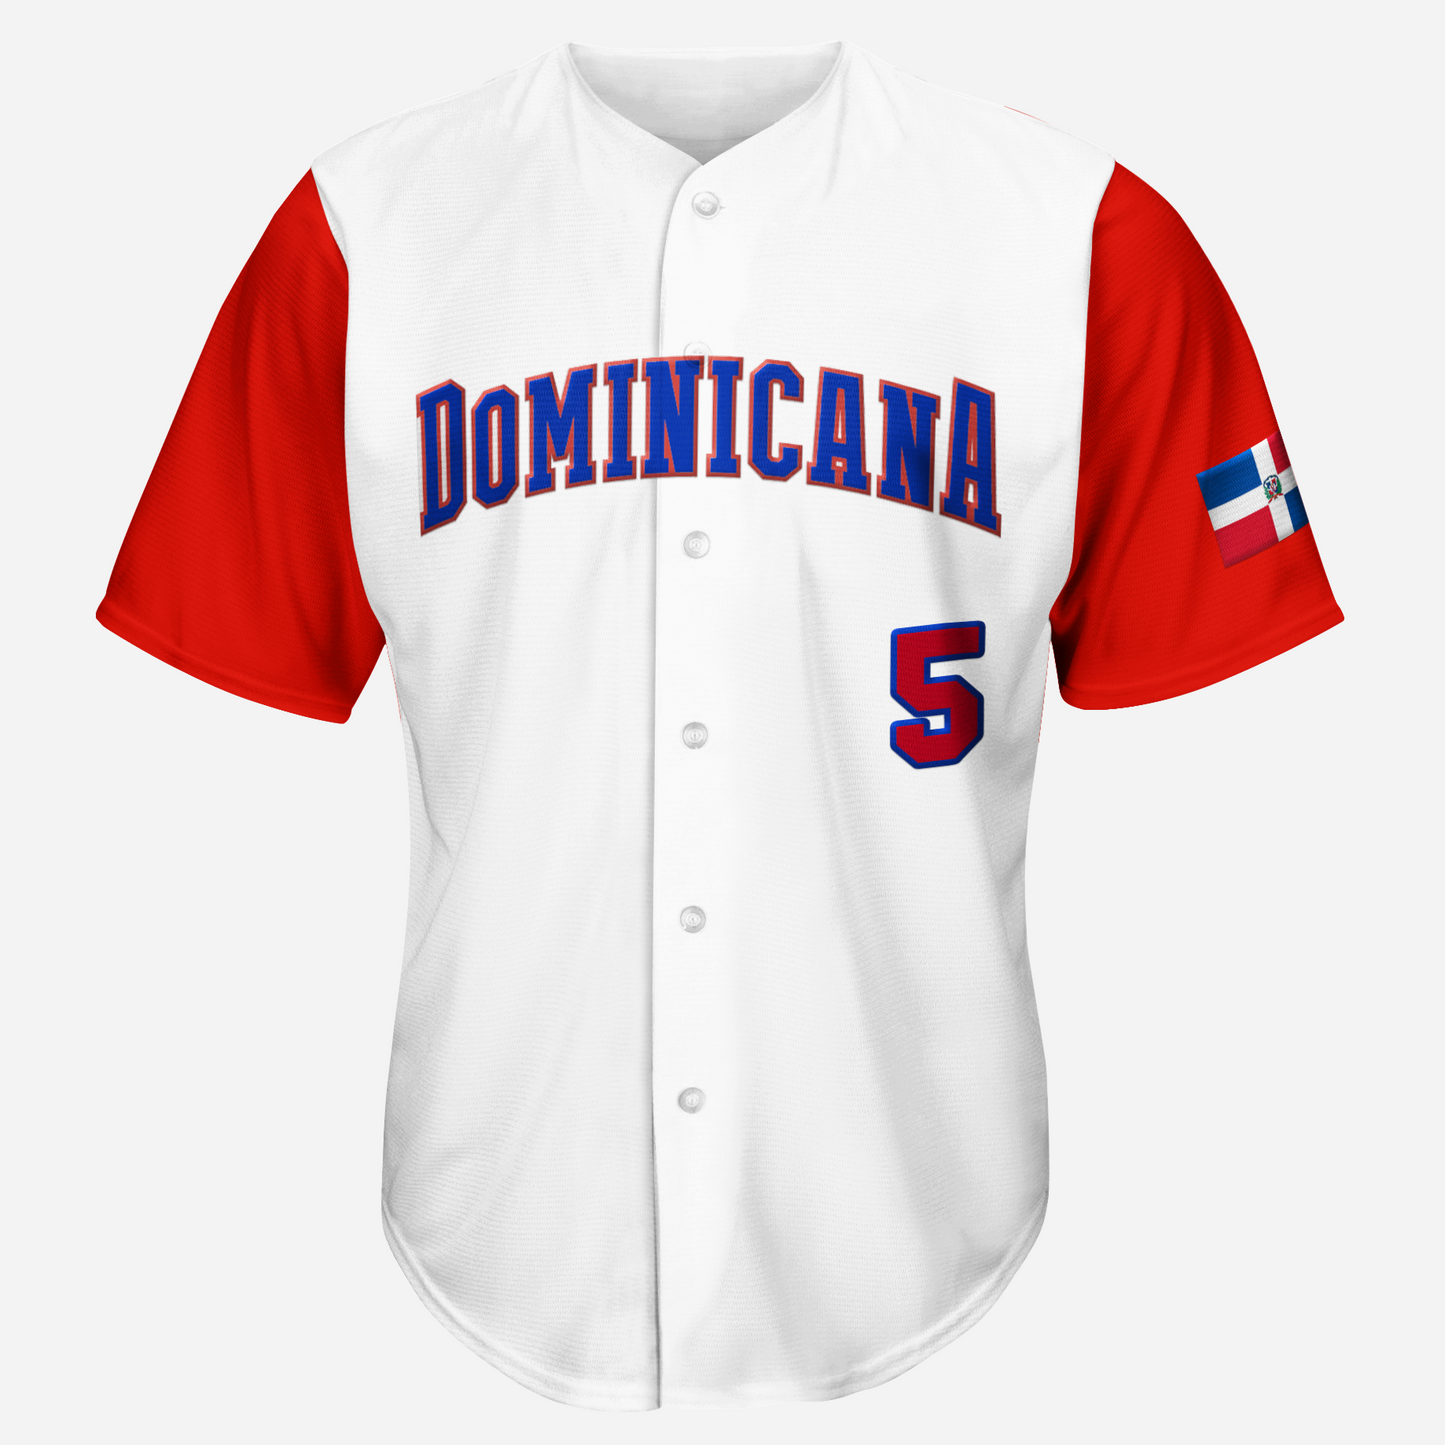 Dominican Republic Baseball Jersey - White - Small - Royal Retros